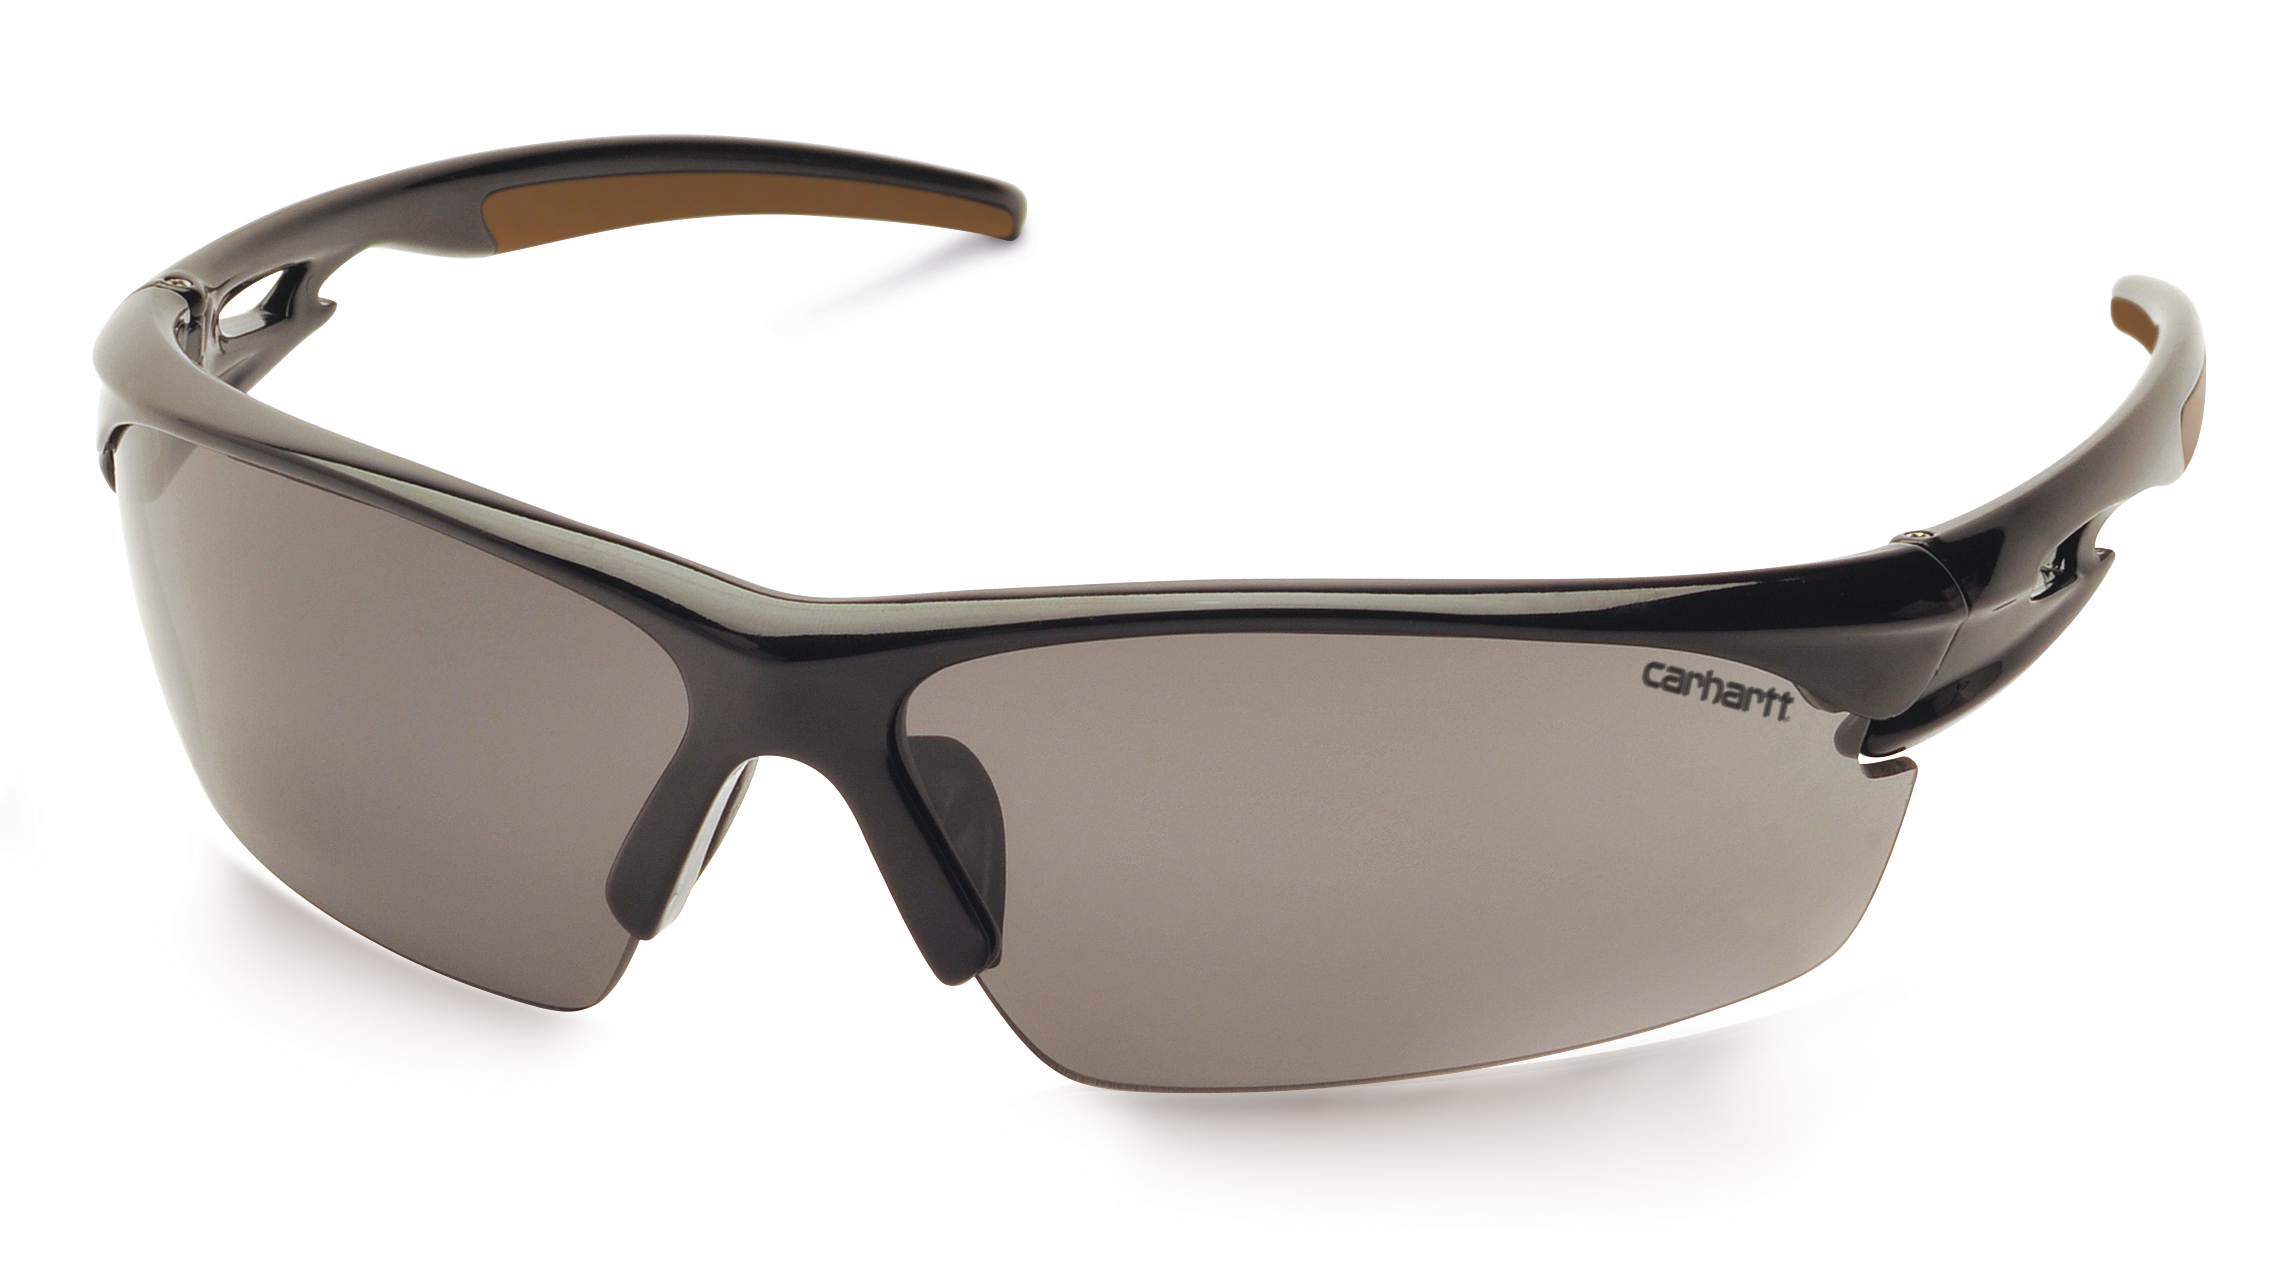 Carhartt Schutzbrille Ironside + , Grau, ANSI Z87.1